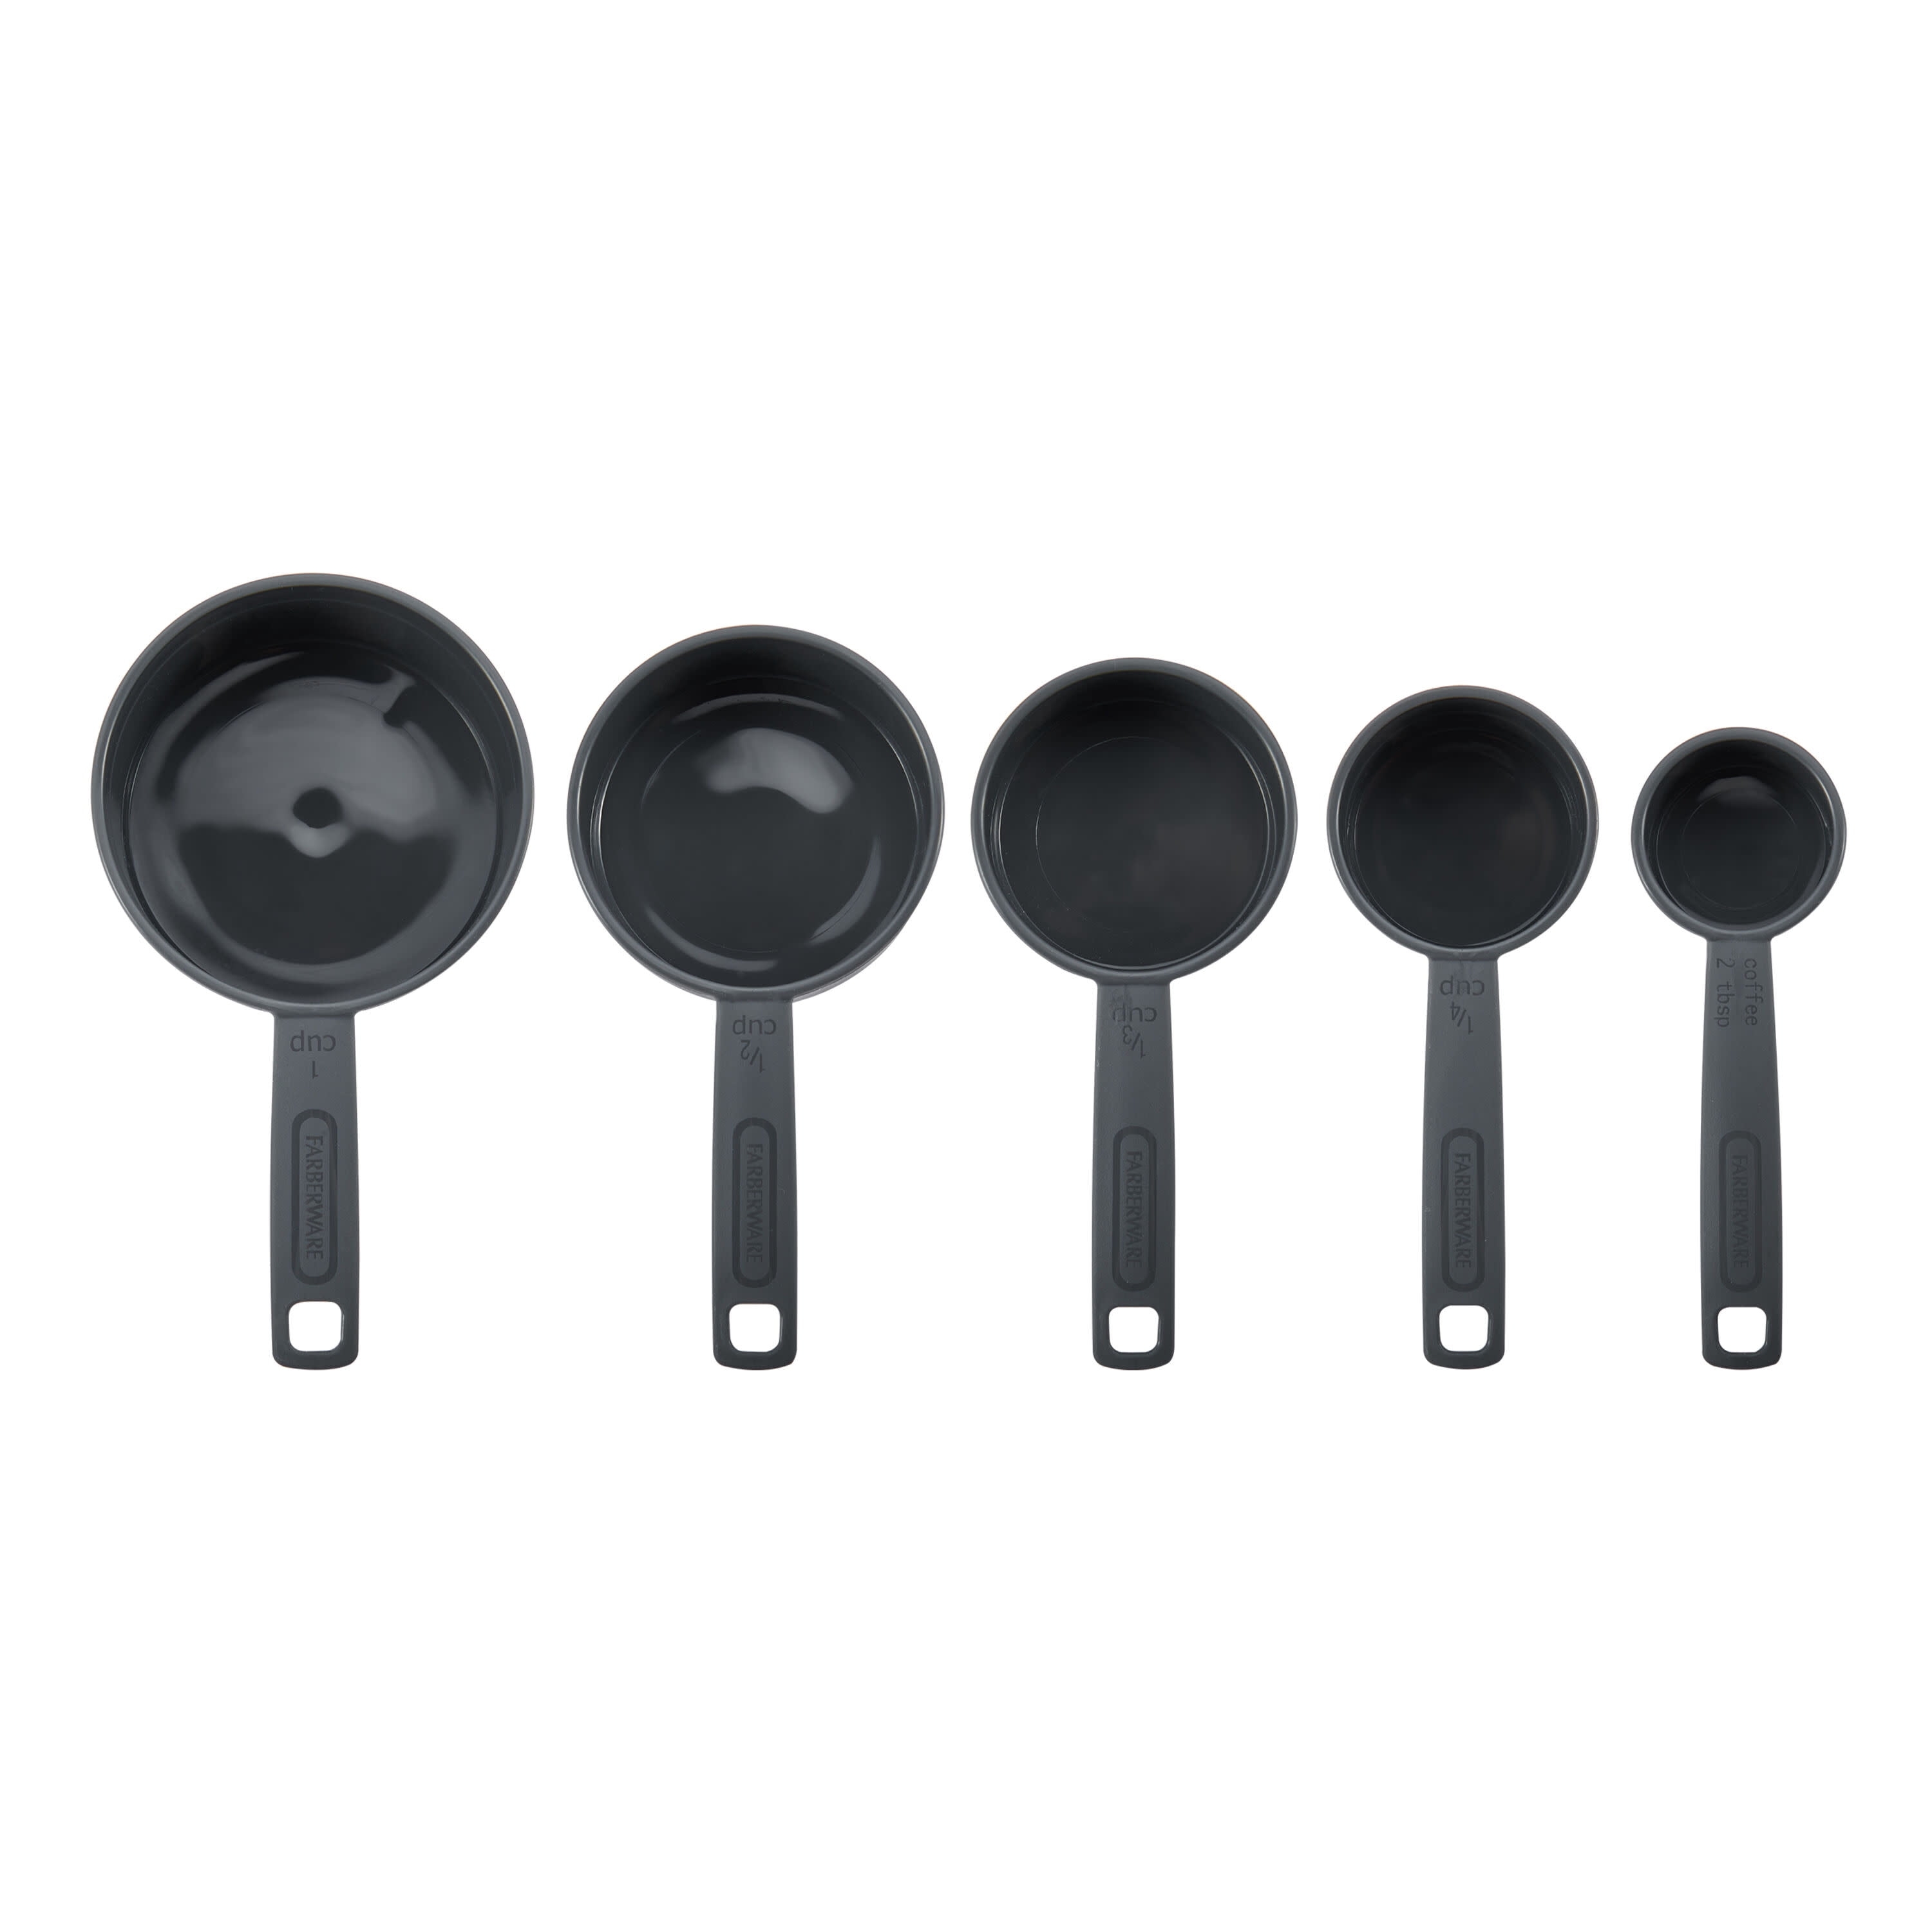 Farberware 4pc Measuring Cup Set, Black